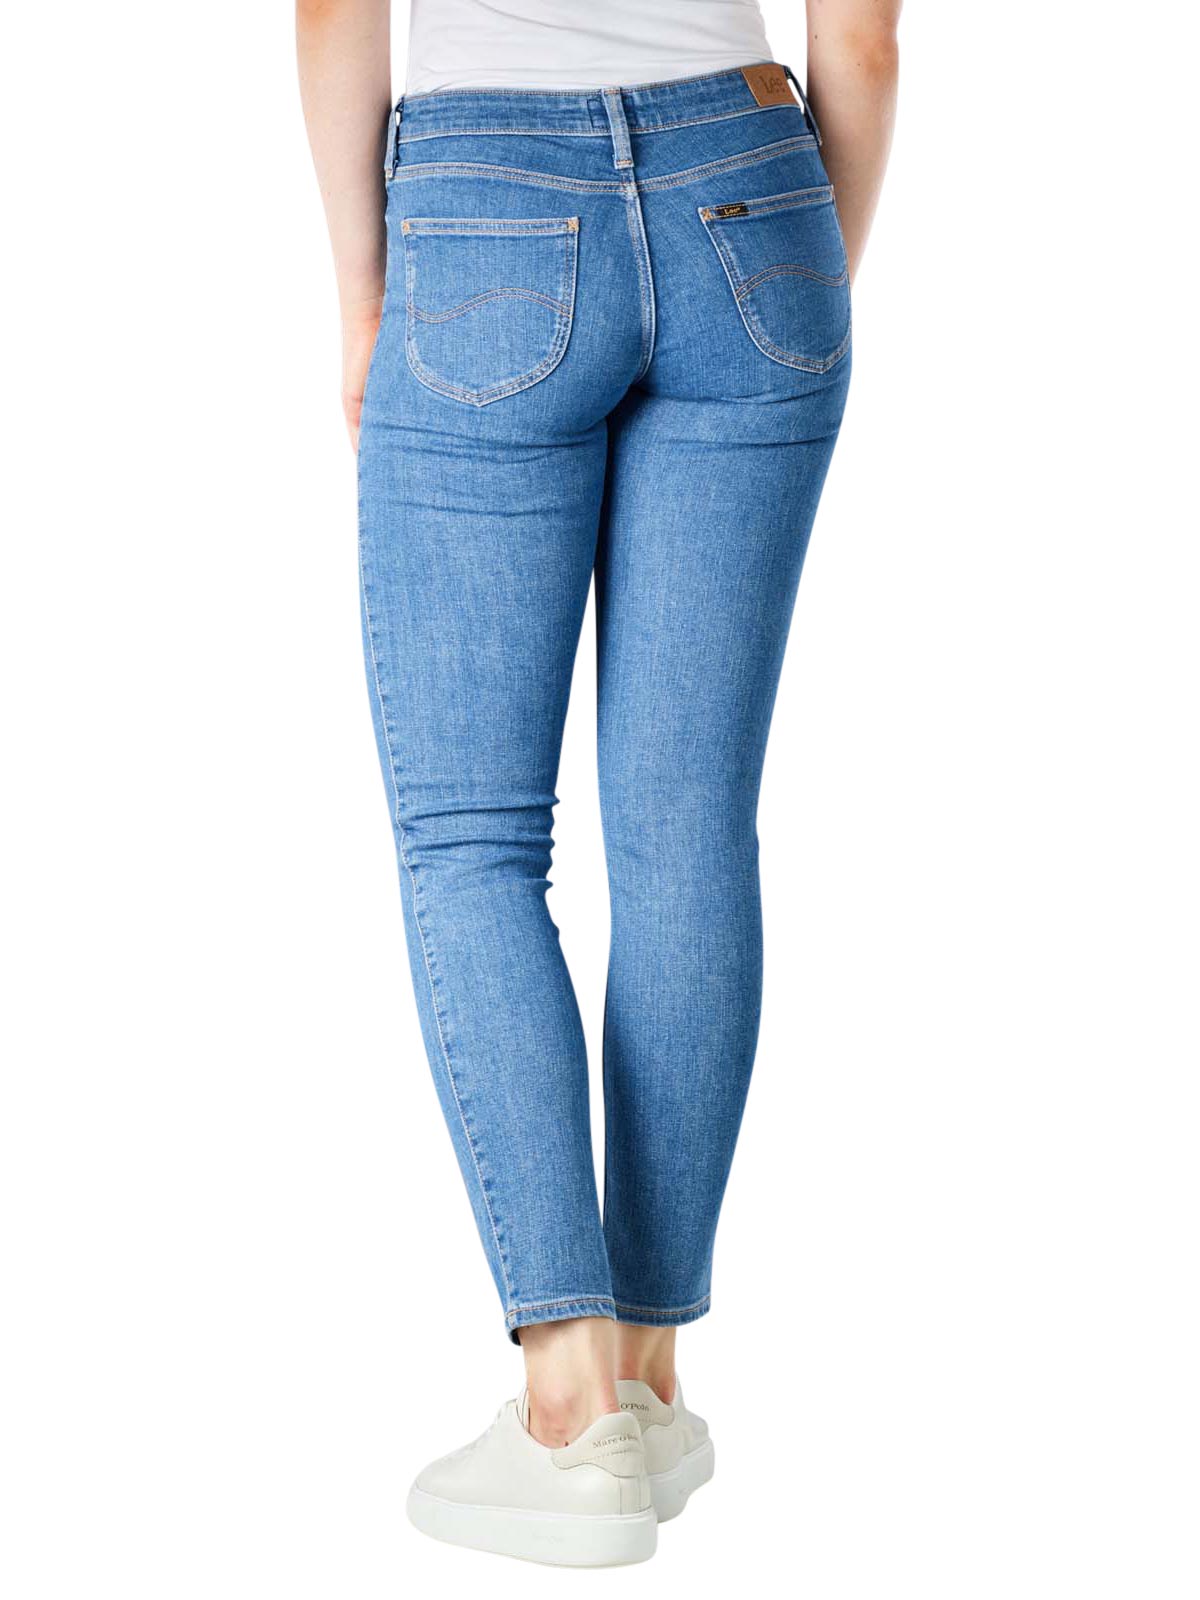 plak Krijger Vermomd Lee Scarlett Jeans Skinny Fit Mid Lexi Lee Women's Jeans | Free Shipping on  BEBASIC.CH - SIMPLY LOOK GOOD